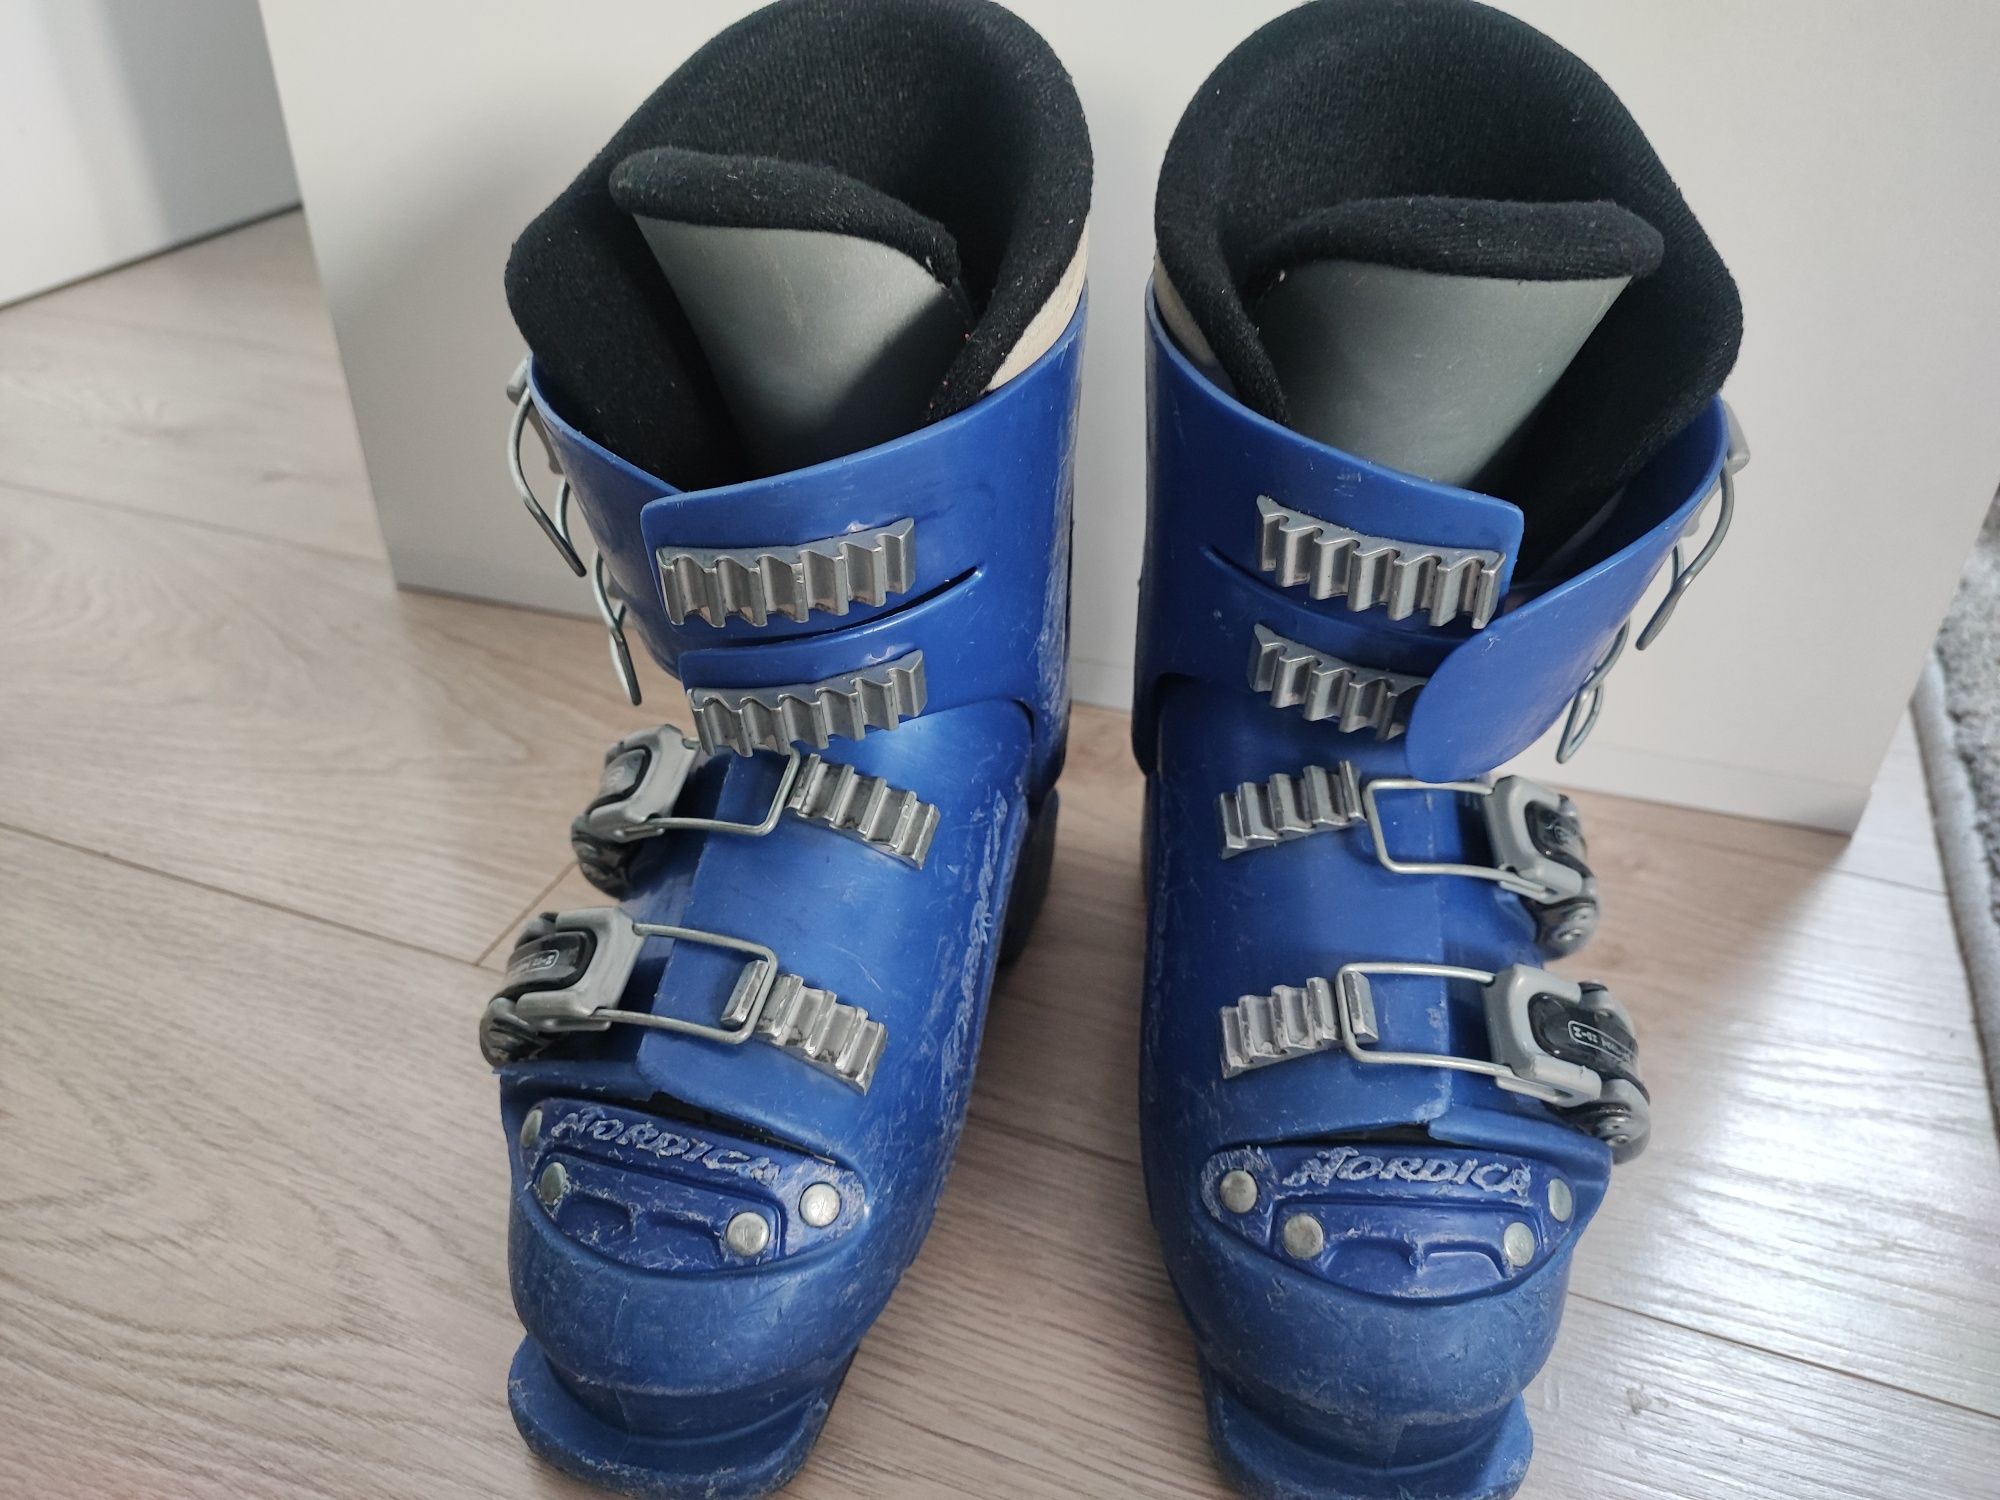 Buty narciarskie Nordica GP TJ, 19,5cm